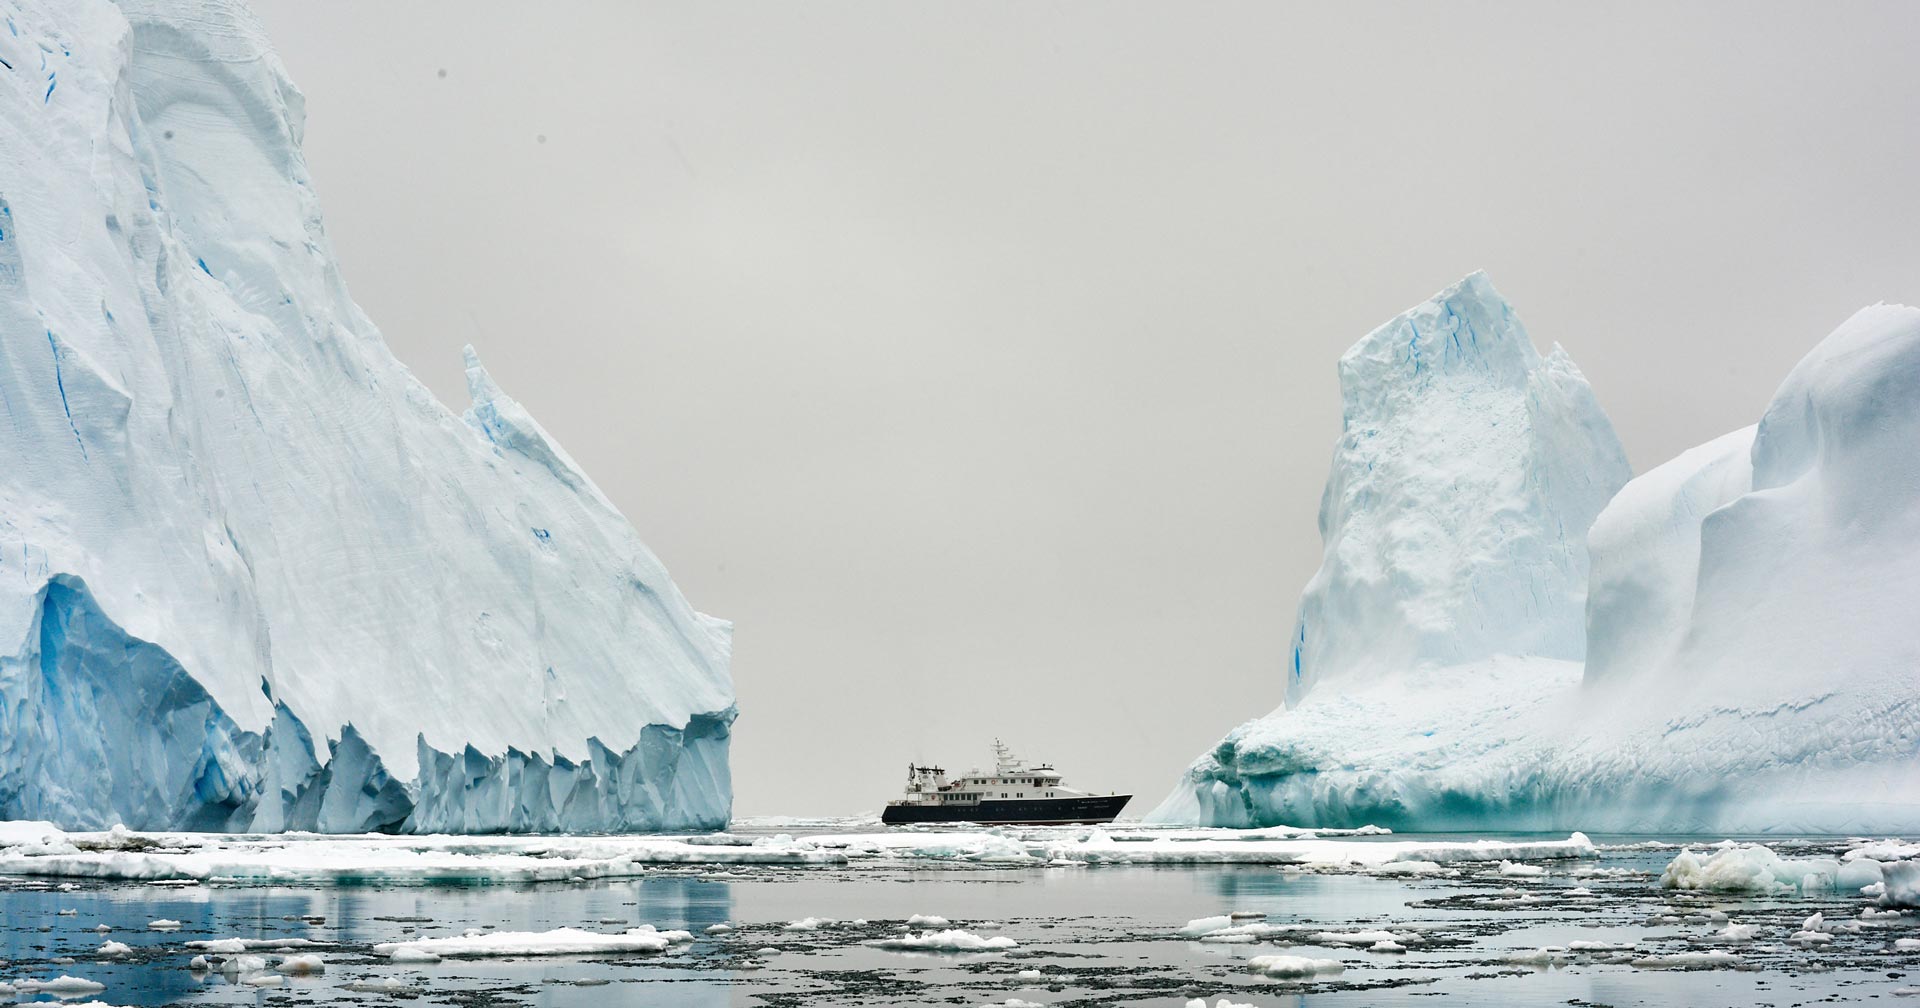 In pictures: Antarctica